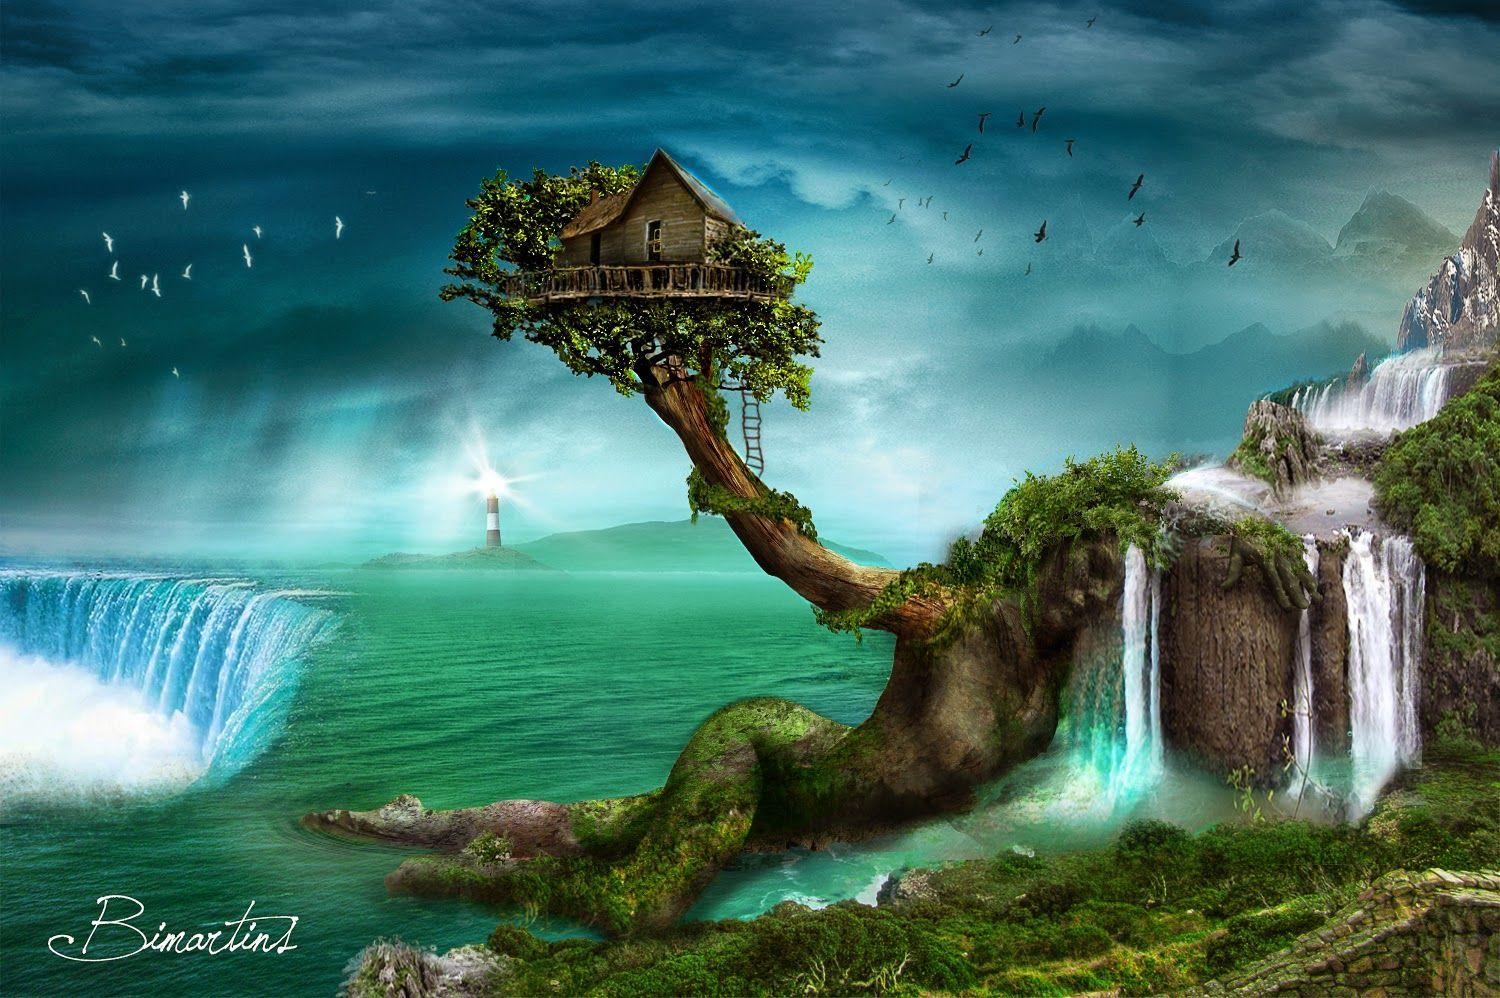 PIXHOME: Beautiful Tree House fantasy fairy tale image picture HD